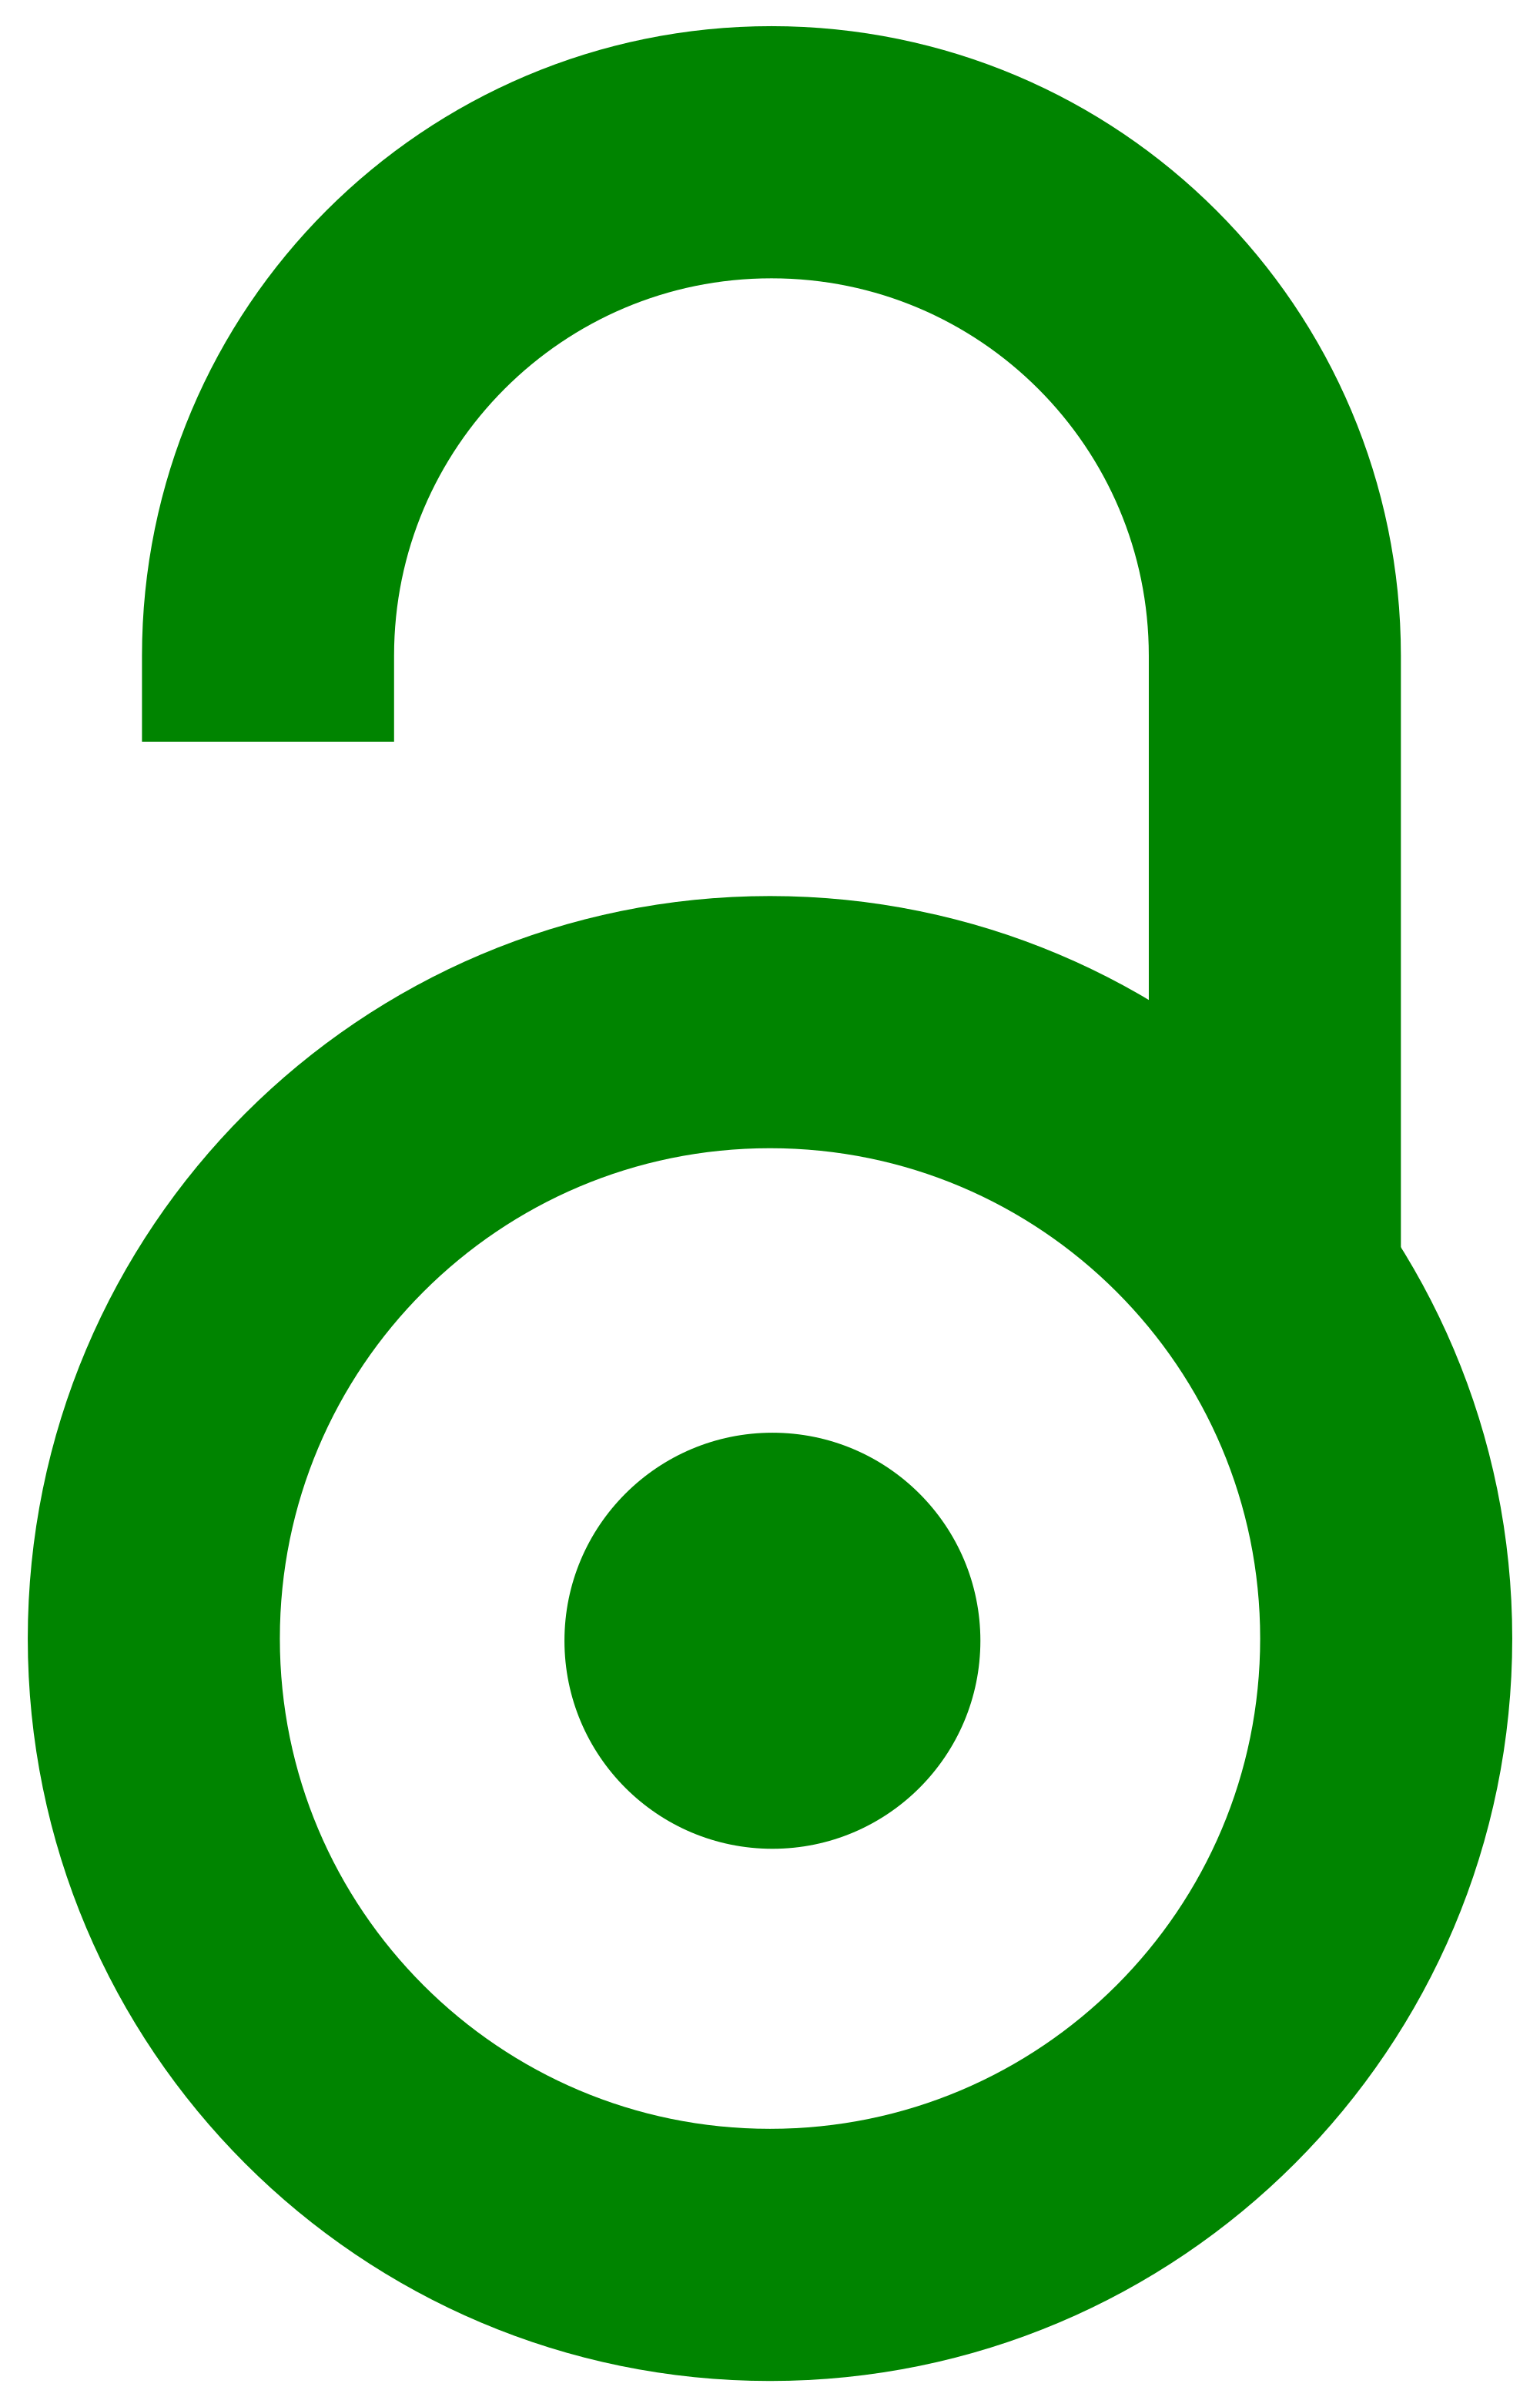 https://library.carleton.ca/sites/default/files/img/open-access-green.jpg